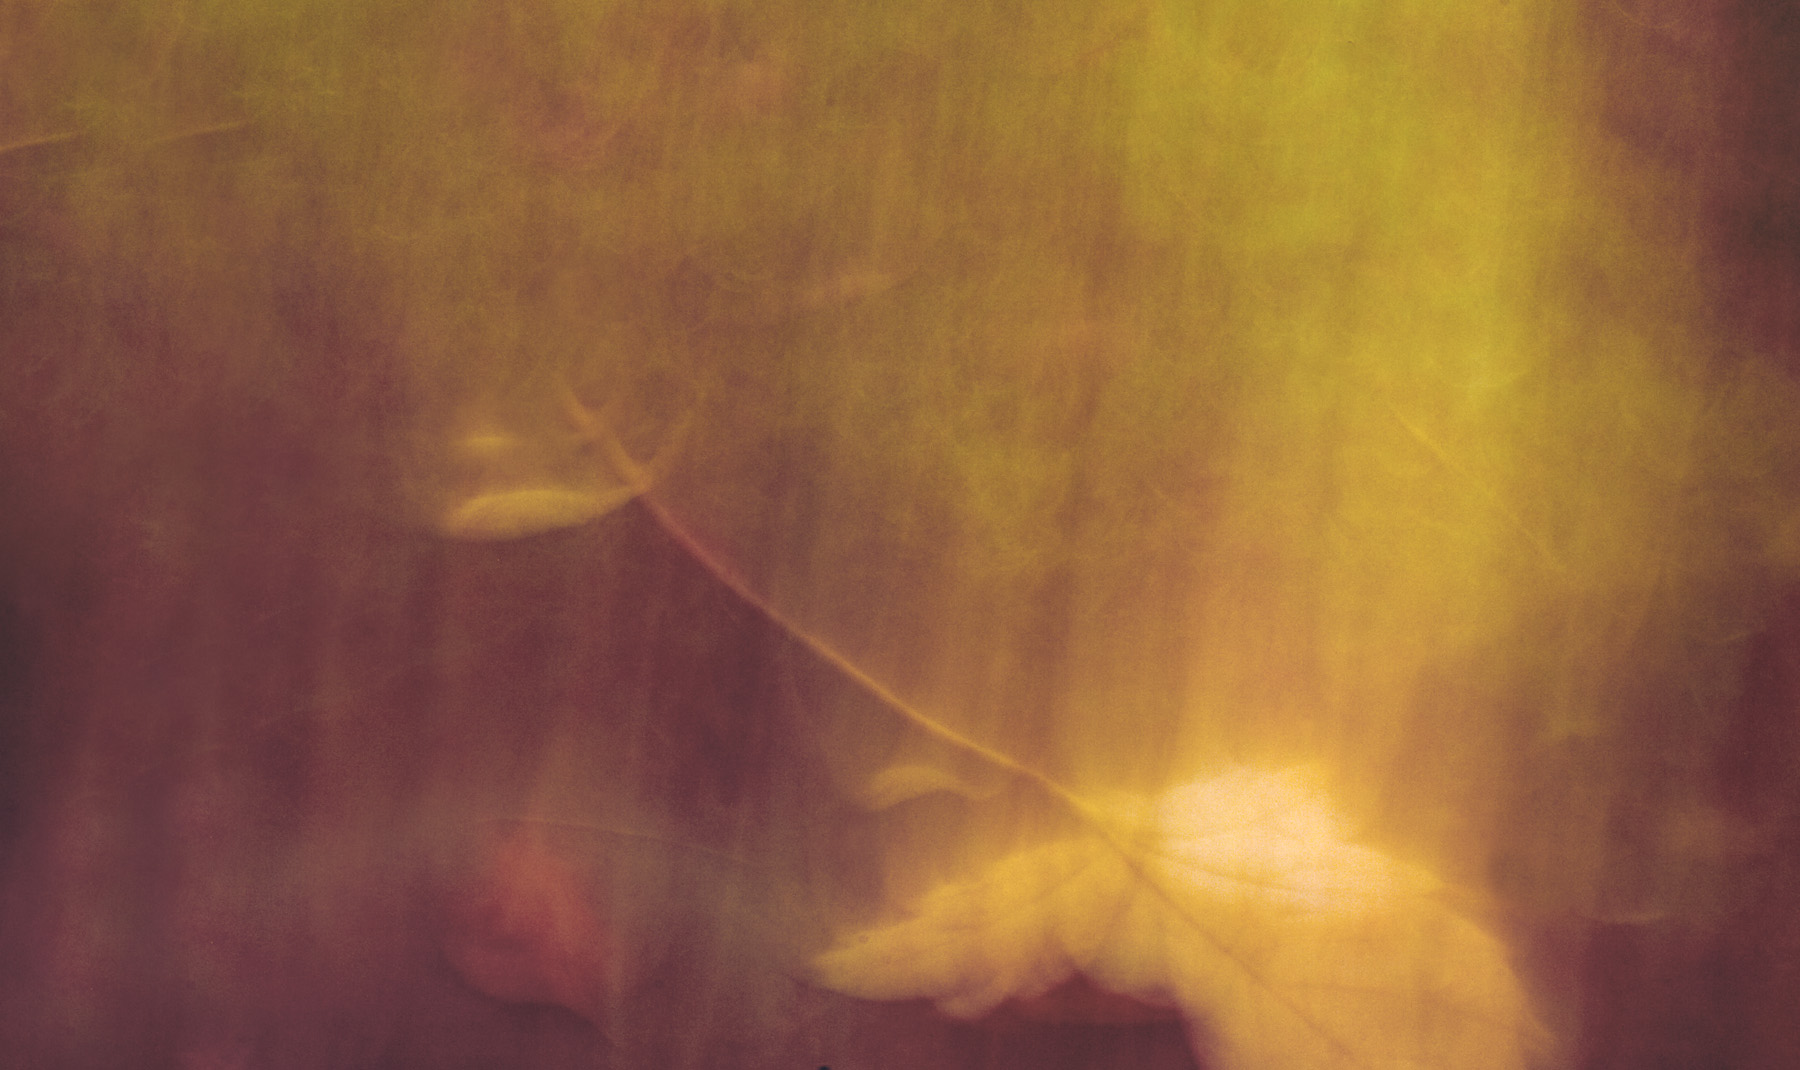 blurry image of a tree leaf